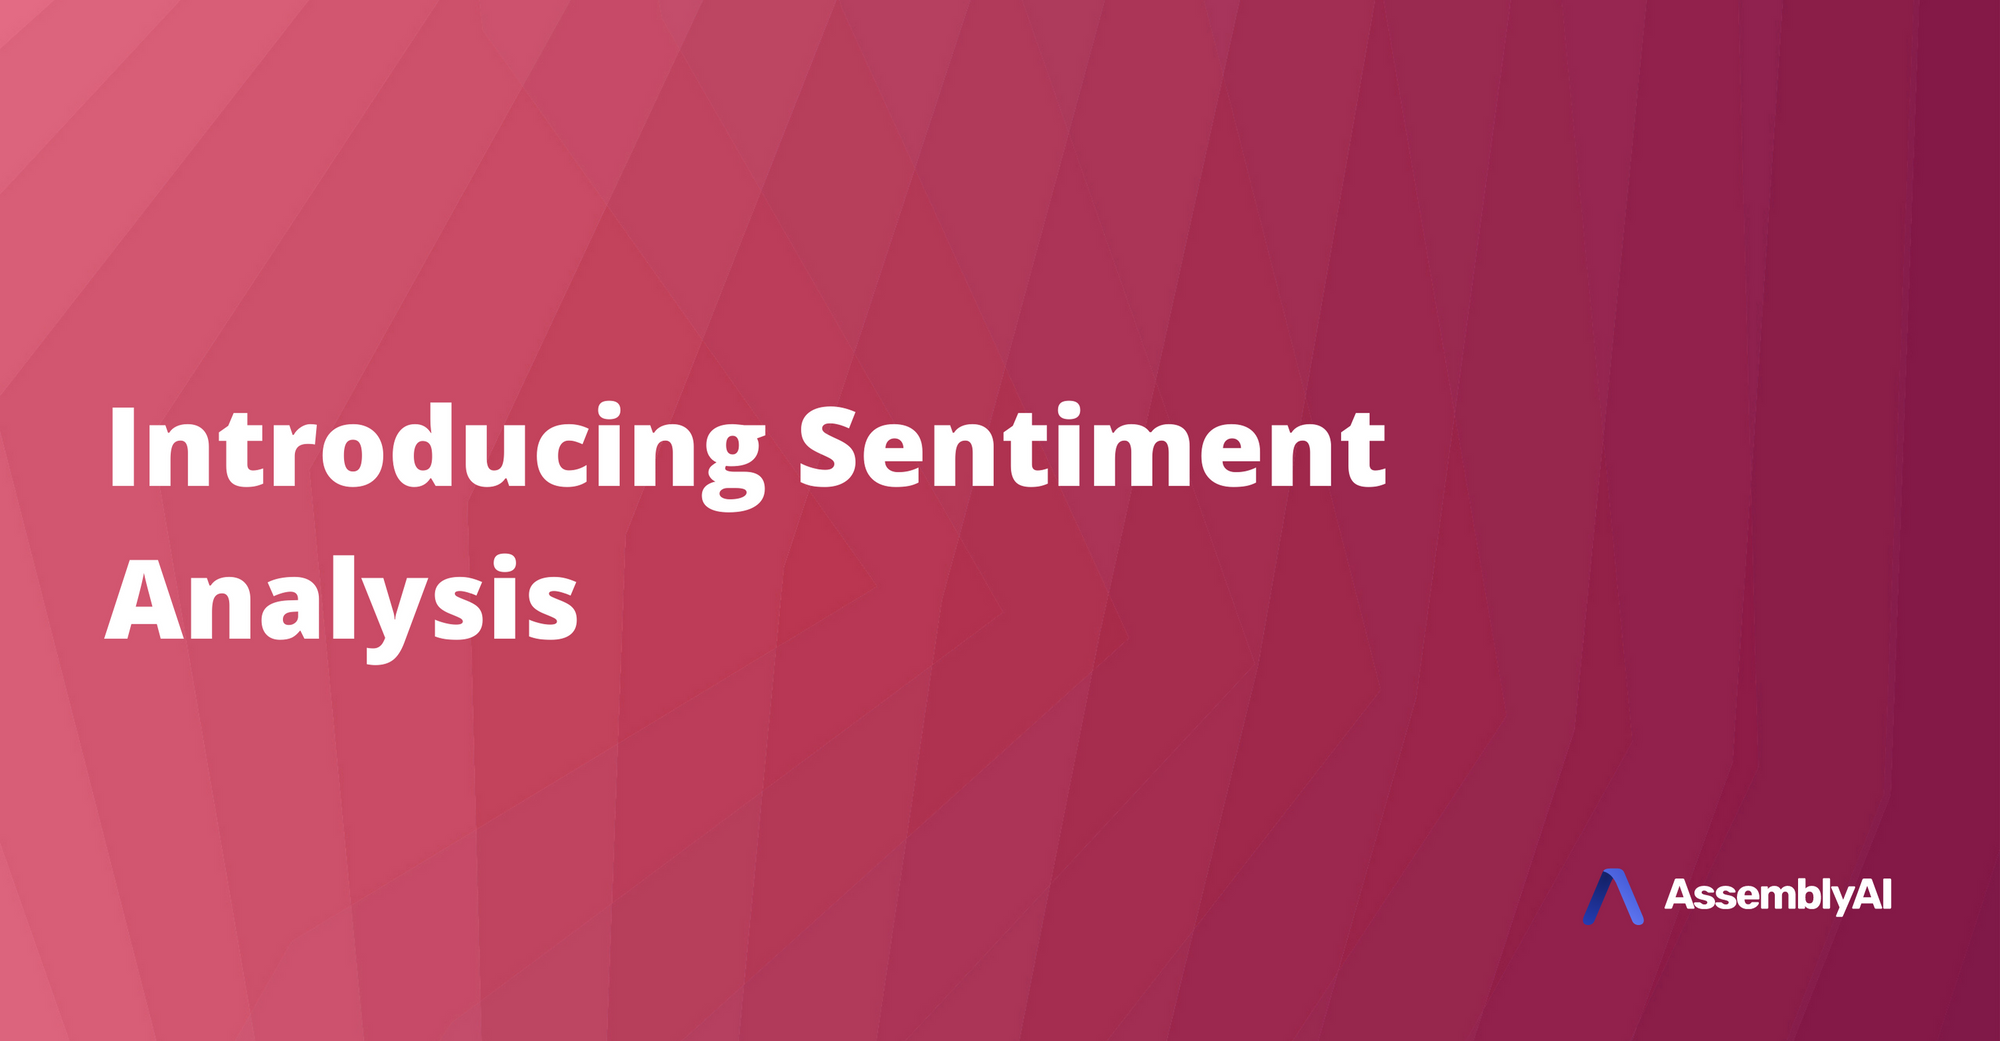 Introducing Sentiment Analysis - Detect Sentiments in Spoken Audio